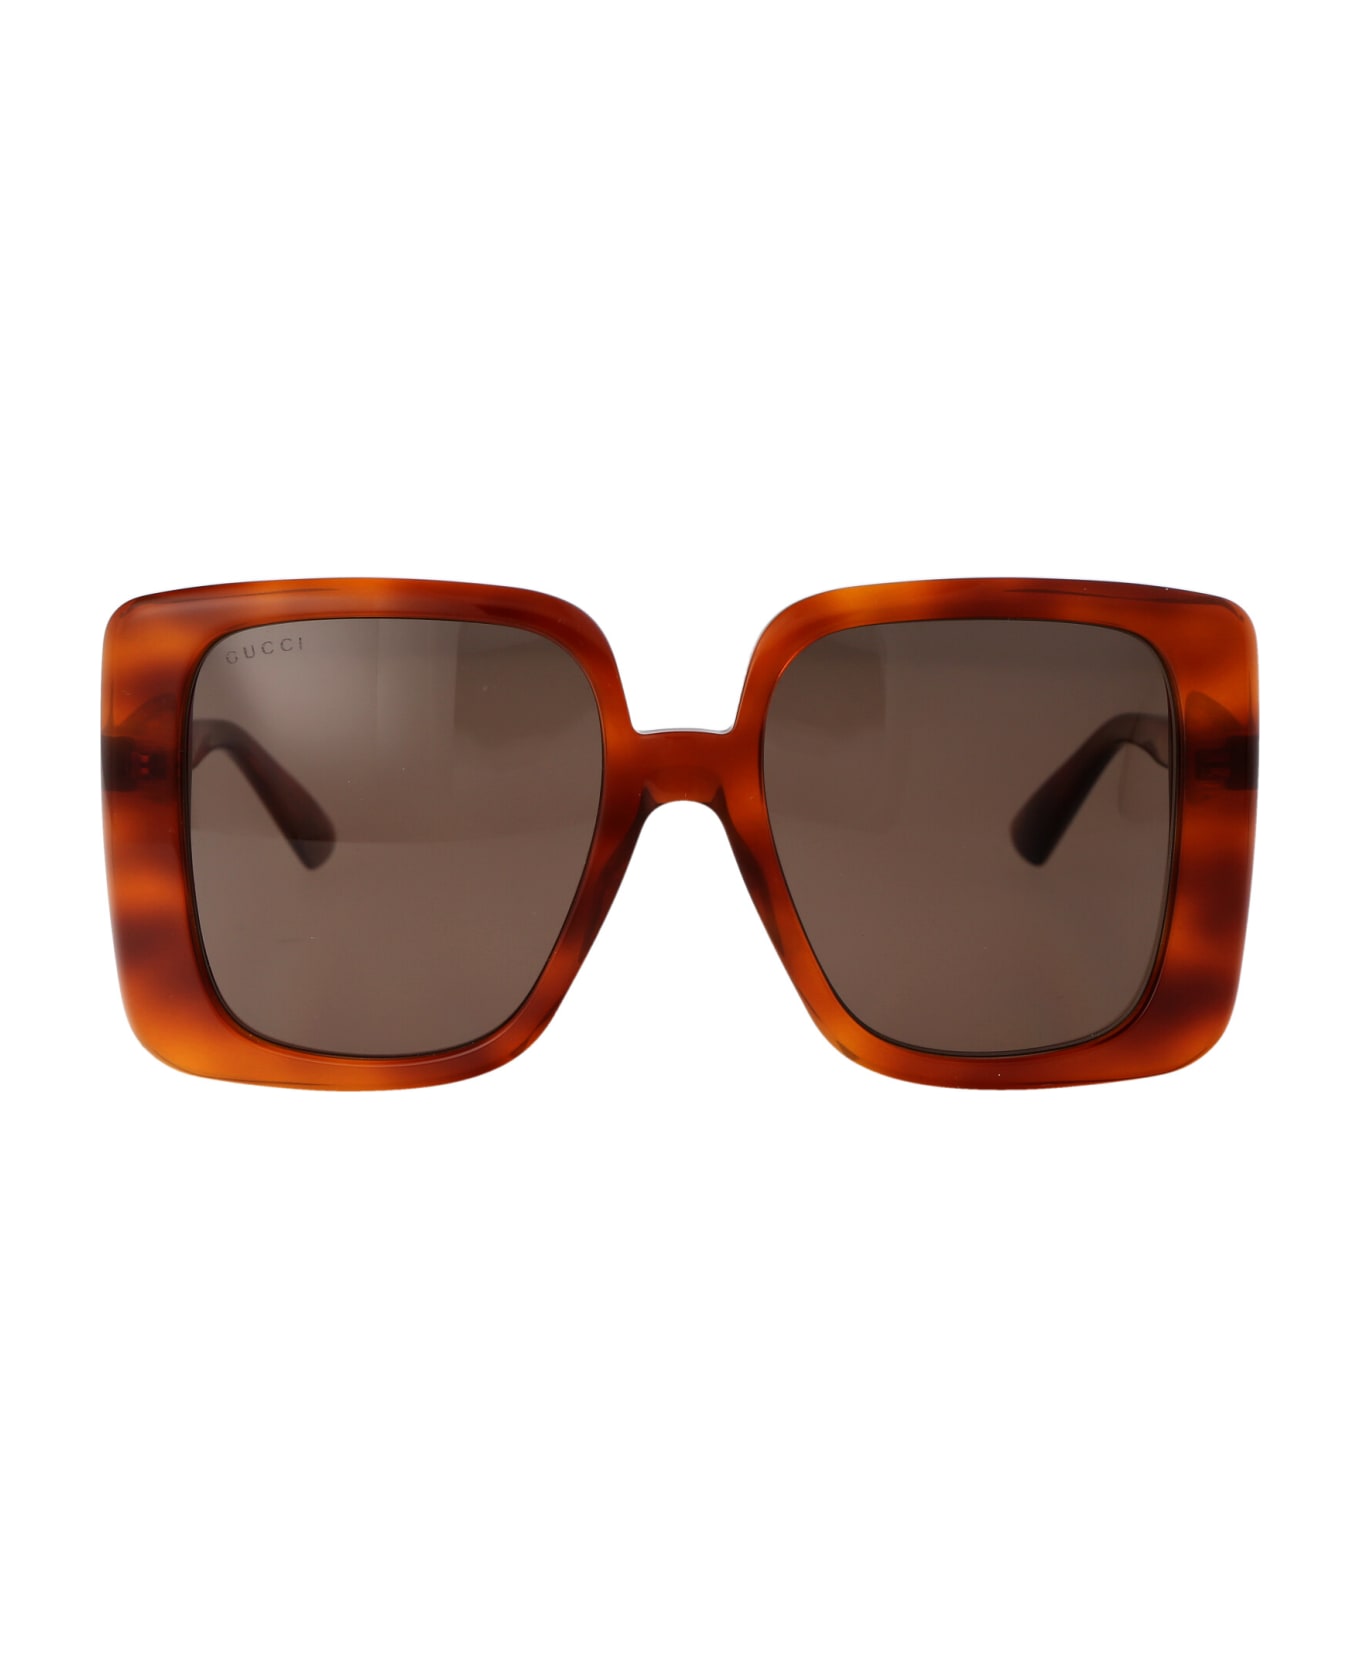 Gucci Eyewear Gg1314s Sunglasses - 002 HAVANA HAVANA BROWN サングラス